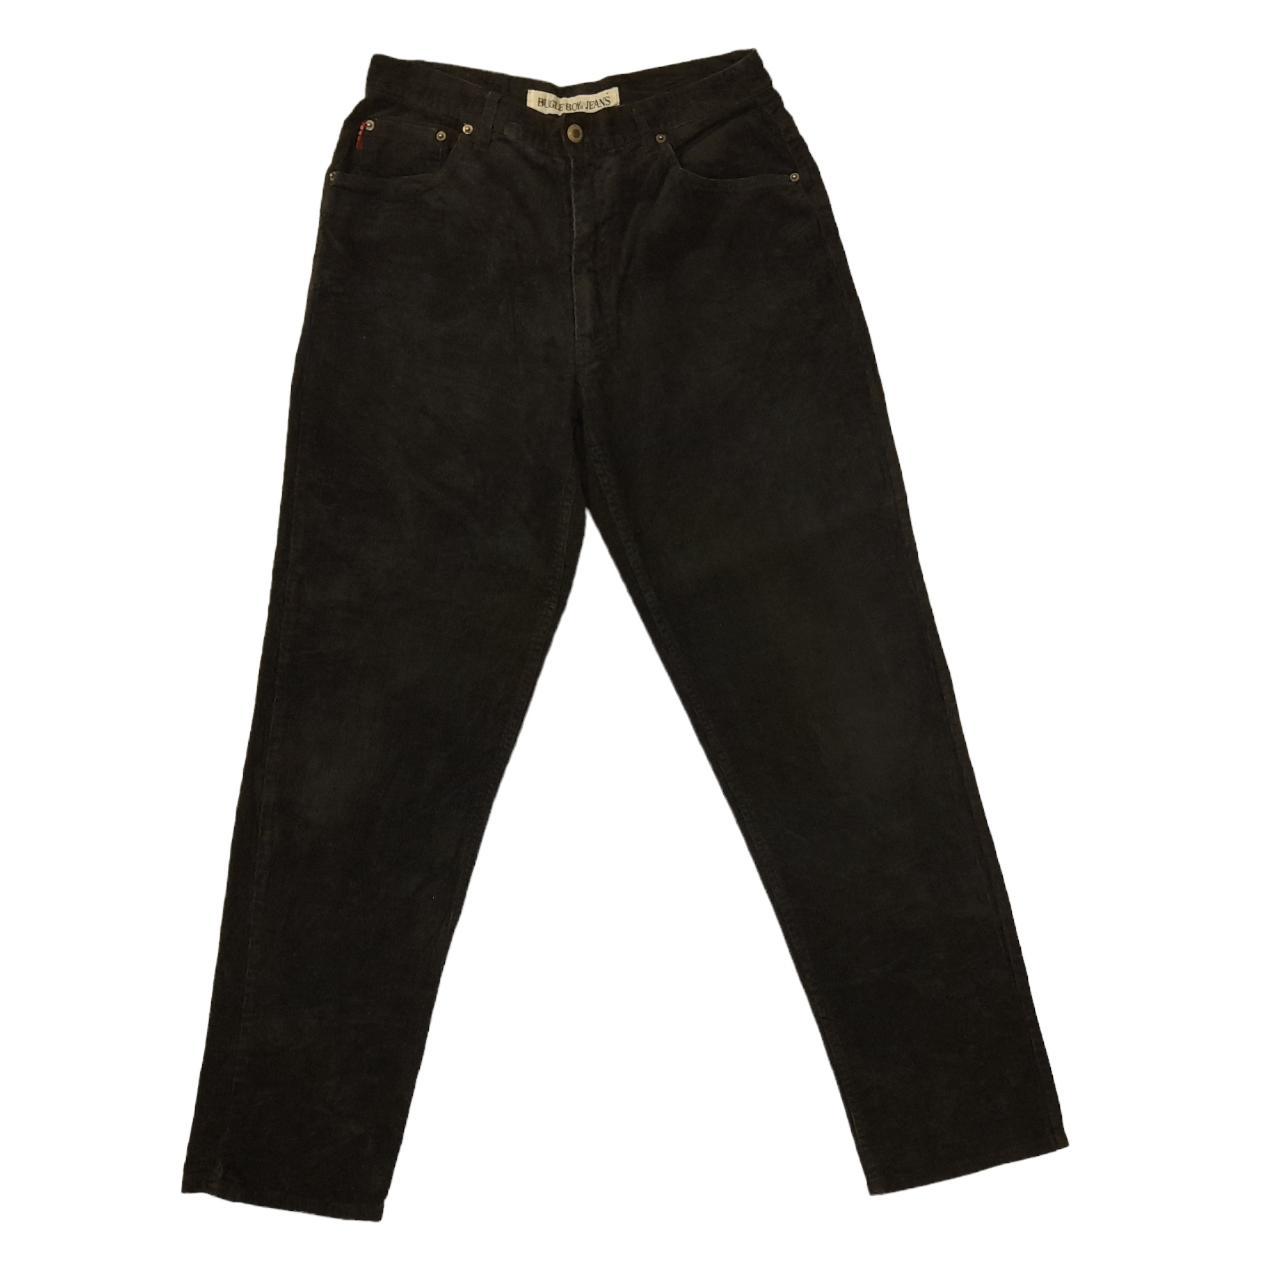 Bugle Boy Corduroy Jeans Black Regular Straight Fit... - Depop